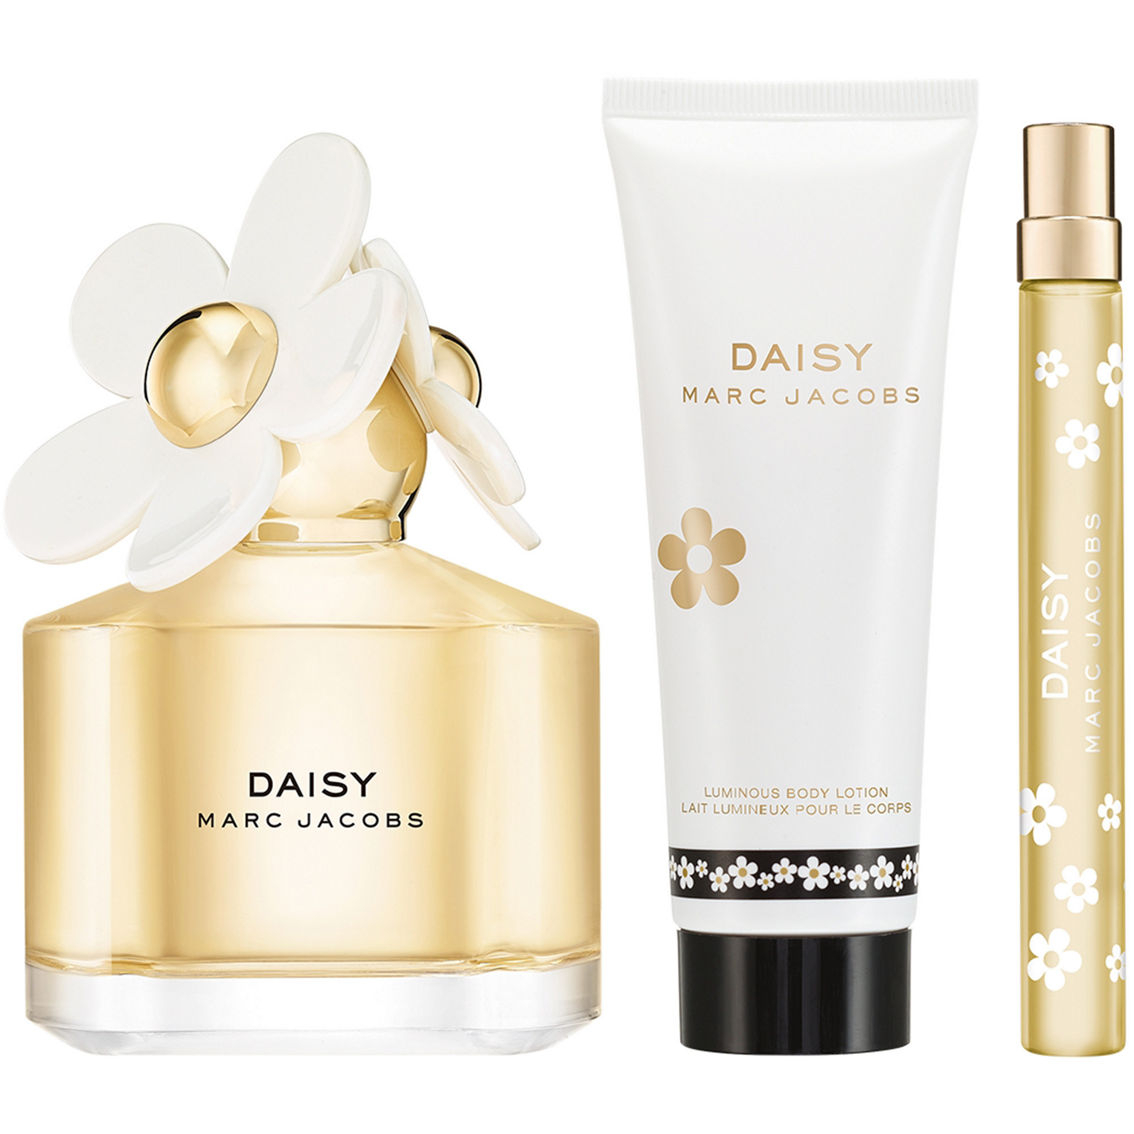 Marc Jacobs Daisy Eau De Toilette 3 Pc. Gift Set | Gifts Sets For Her ...